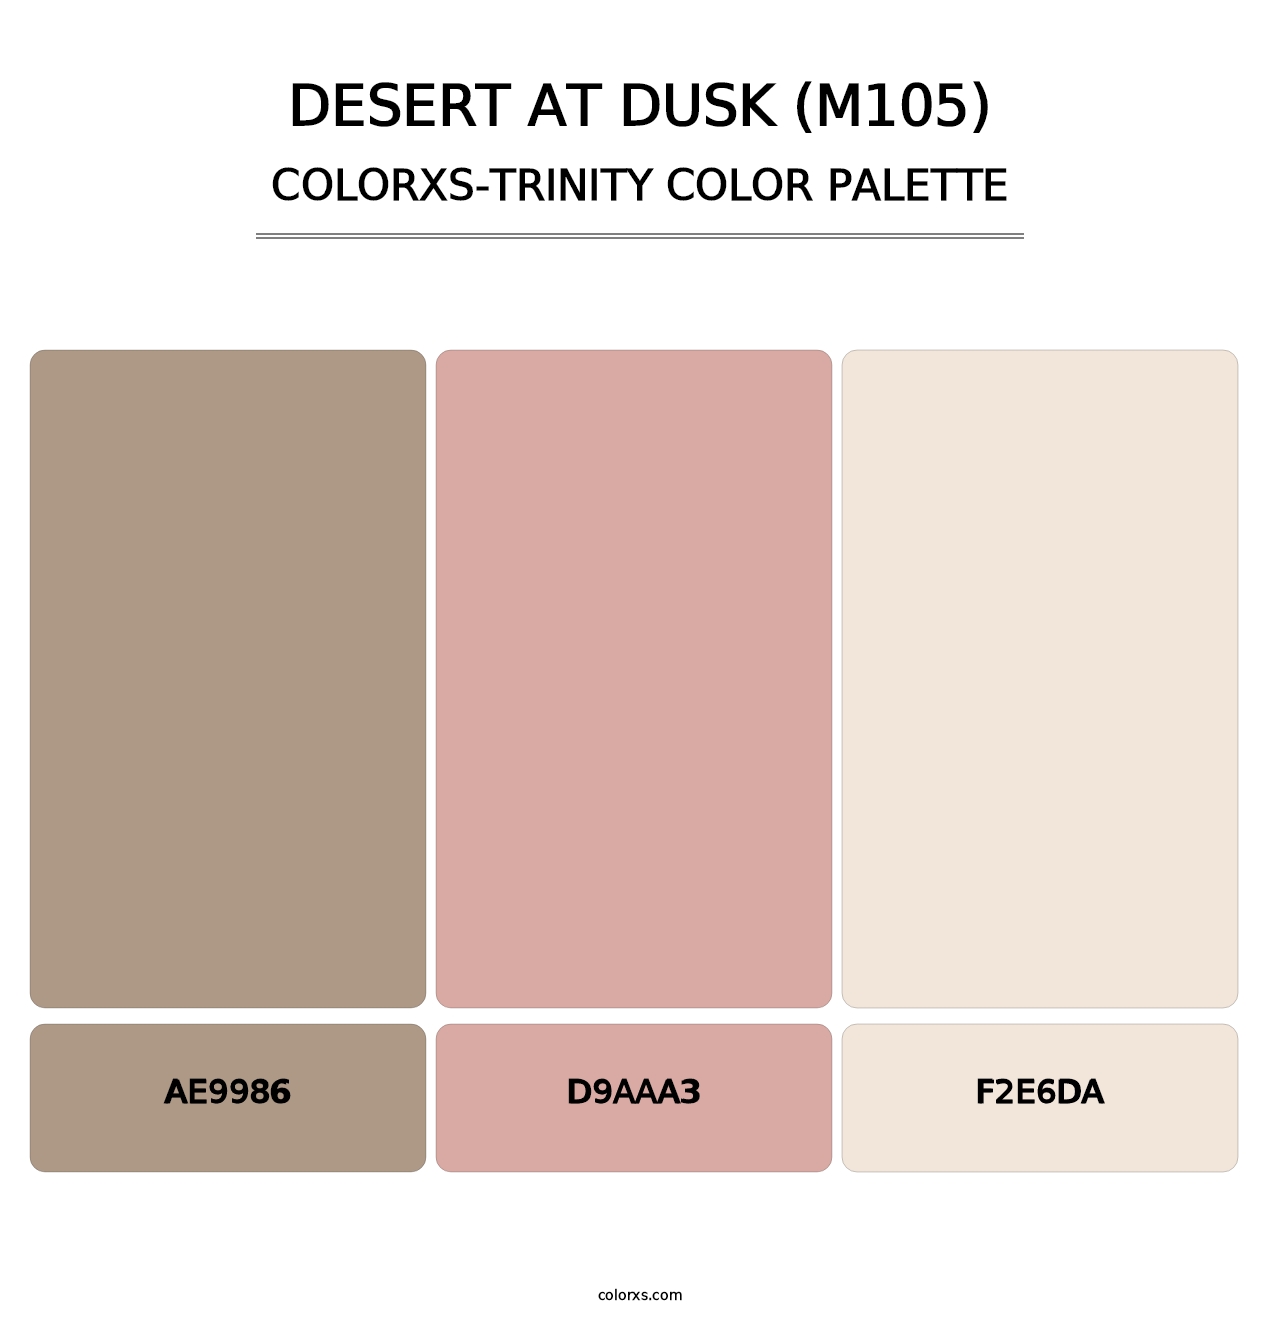 Desert at Dusk (M105) - Colorxs Trinity Palette